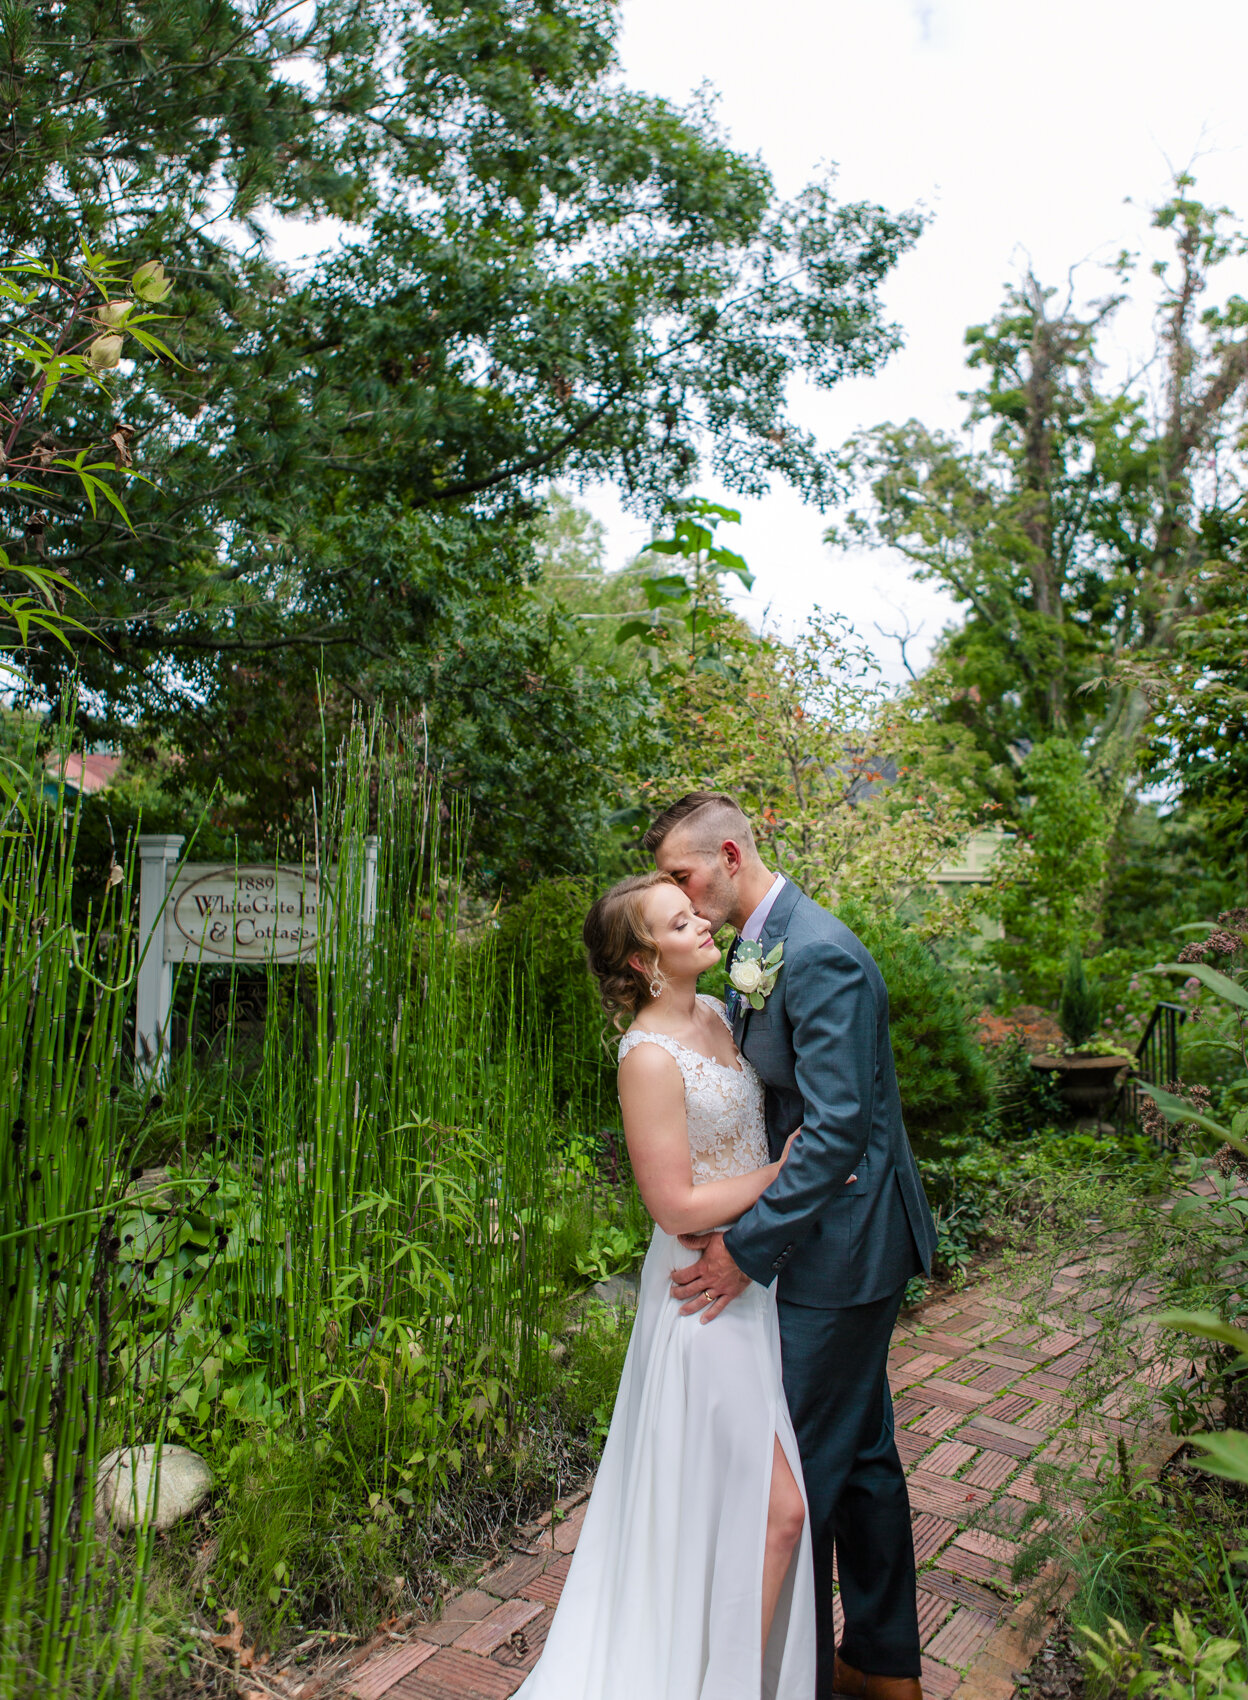 Katelynn and Kyle Wedding at WhiteGate Inn and Cottage Asheville NC_photos by Studio Misha_BLOG-49.jpg